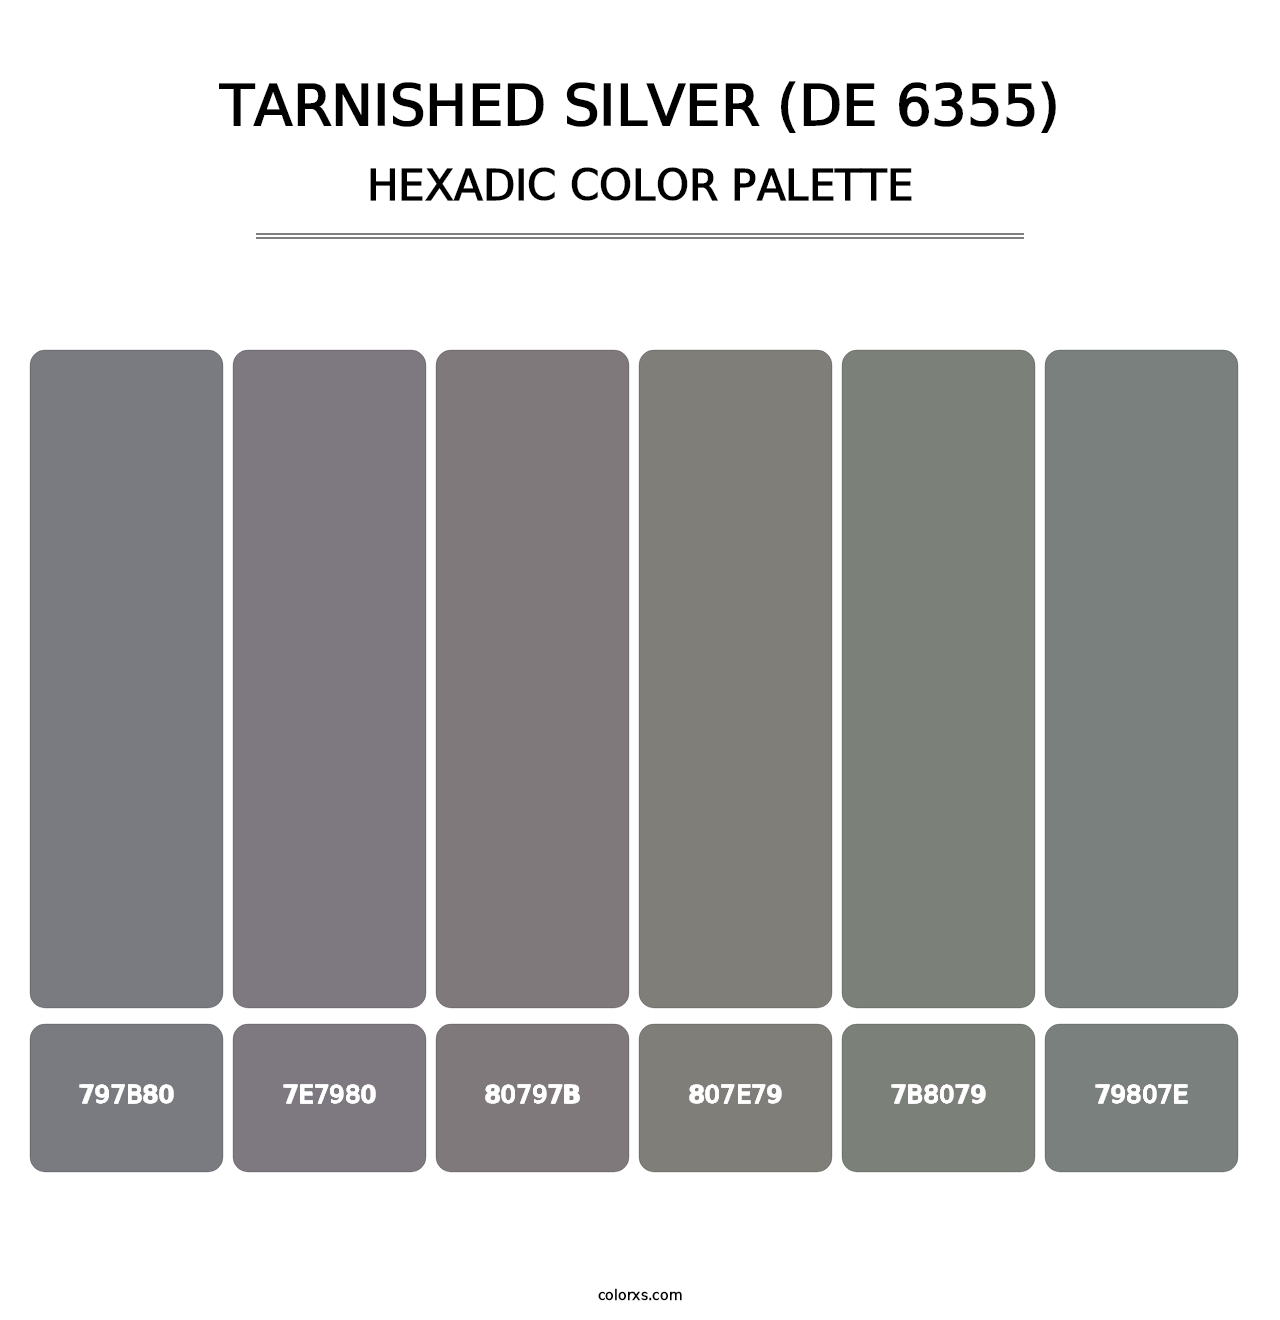 Tarnished Silver (DE 6355) - Hexadic Color Palette